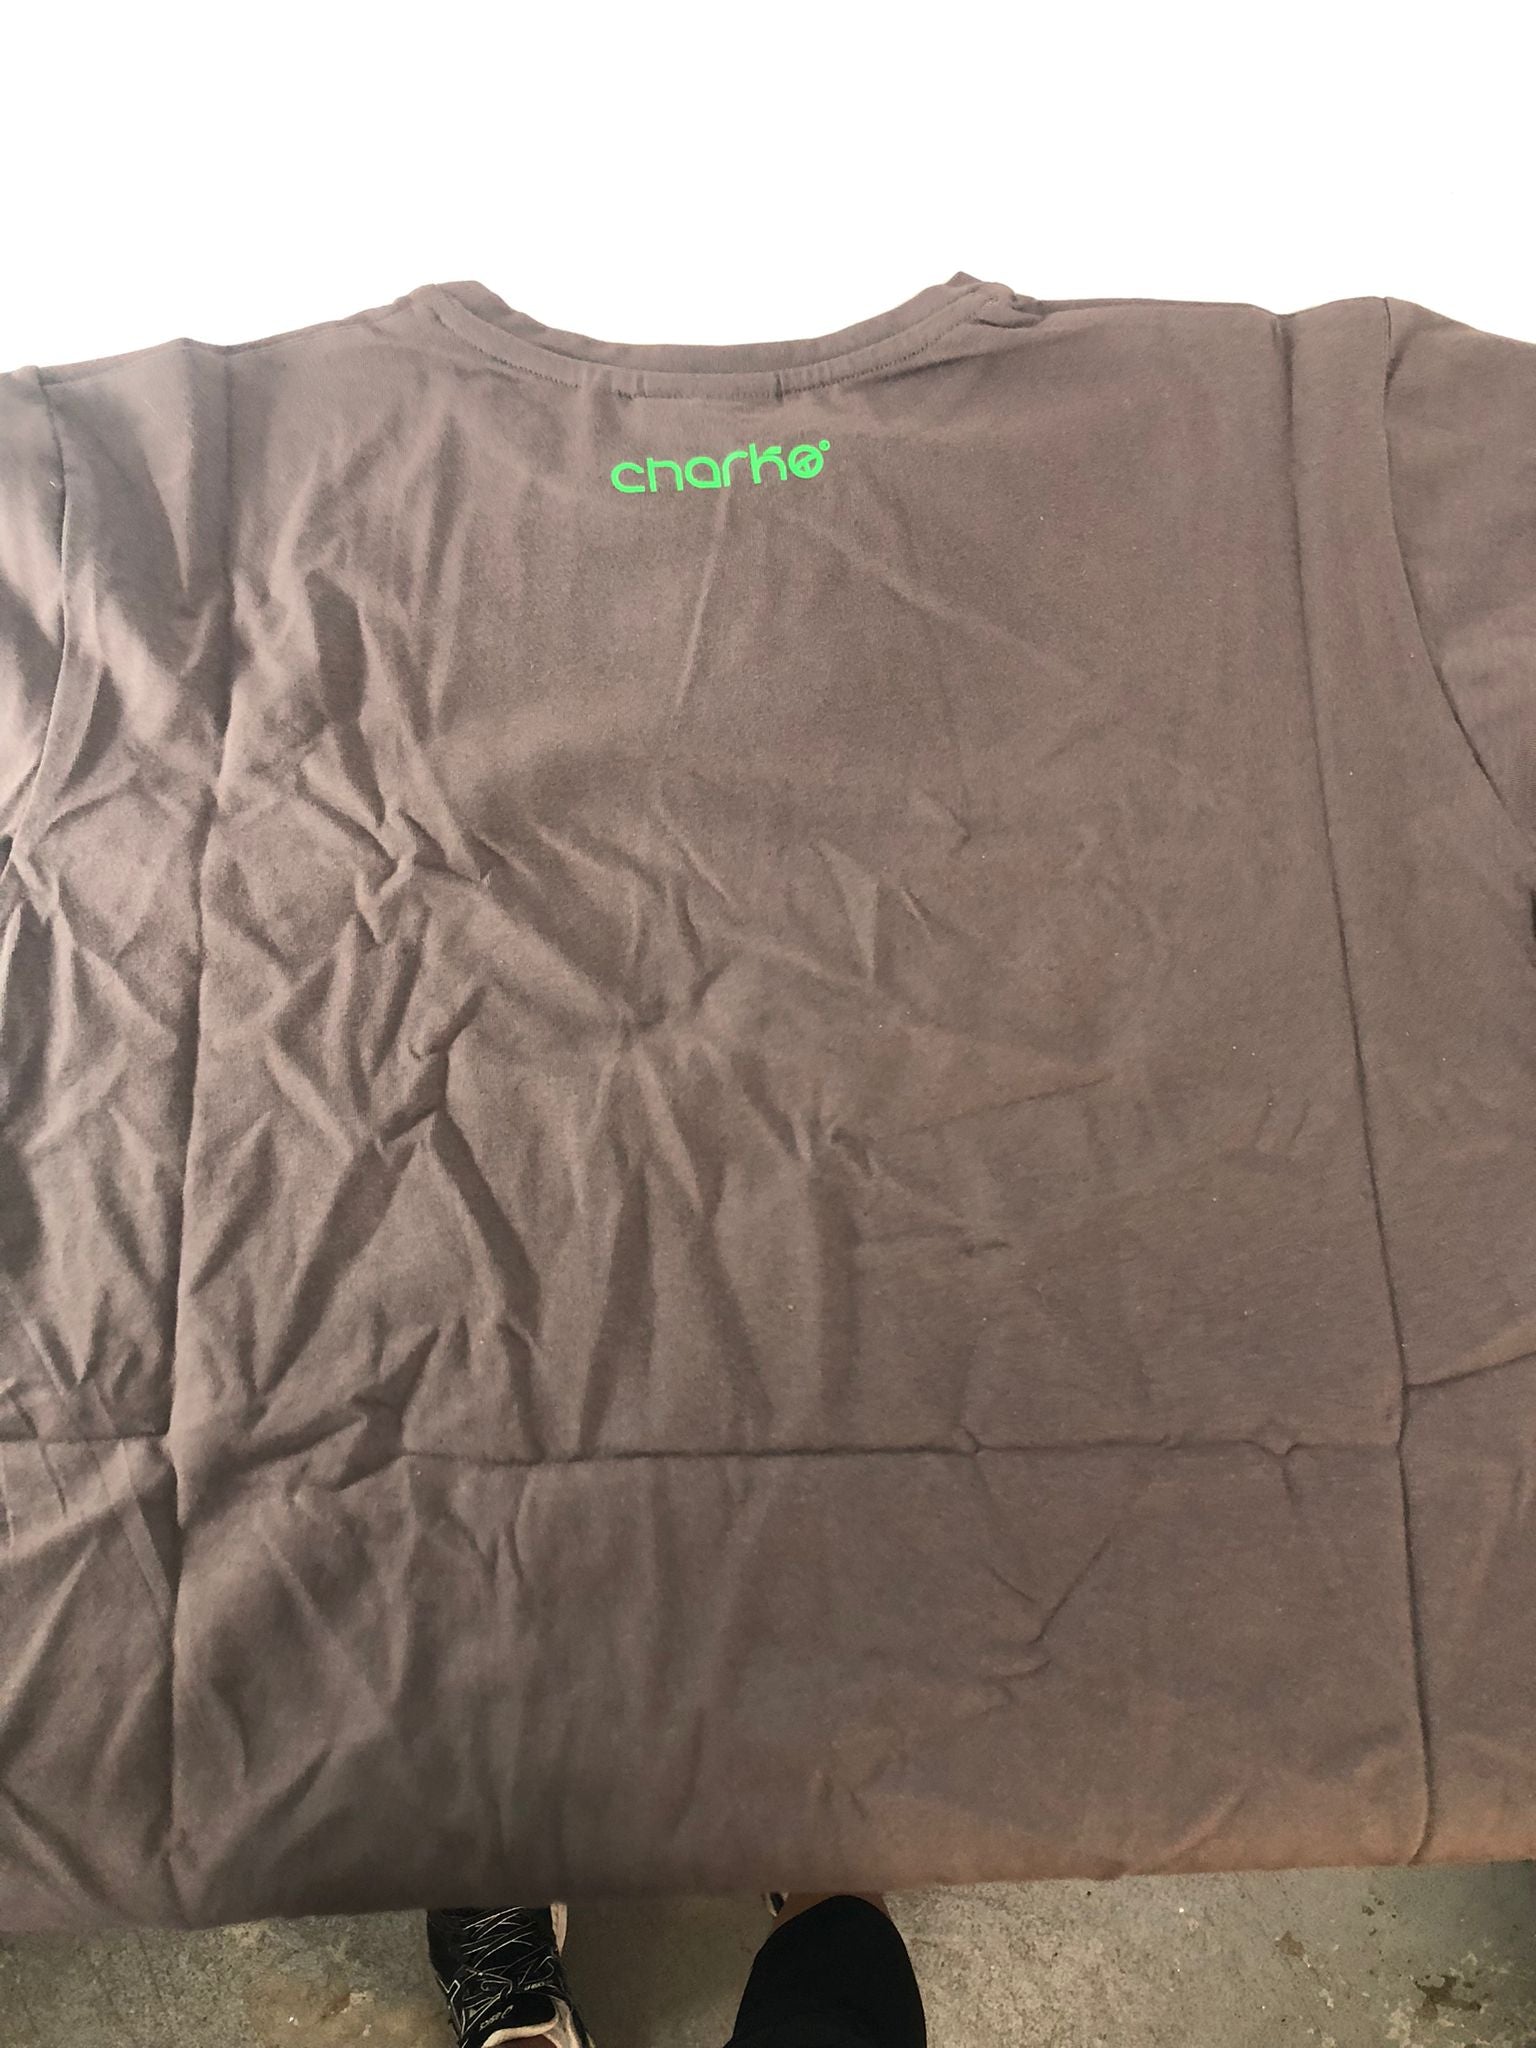 Charko Designs Men's Splitrocks Rock Climbing T-Shirt, Brown XS